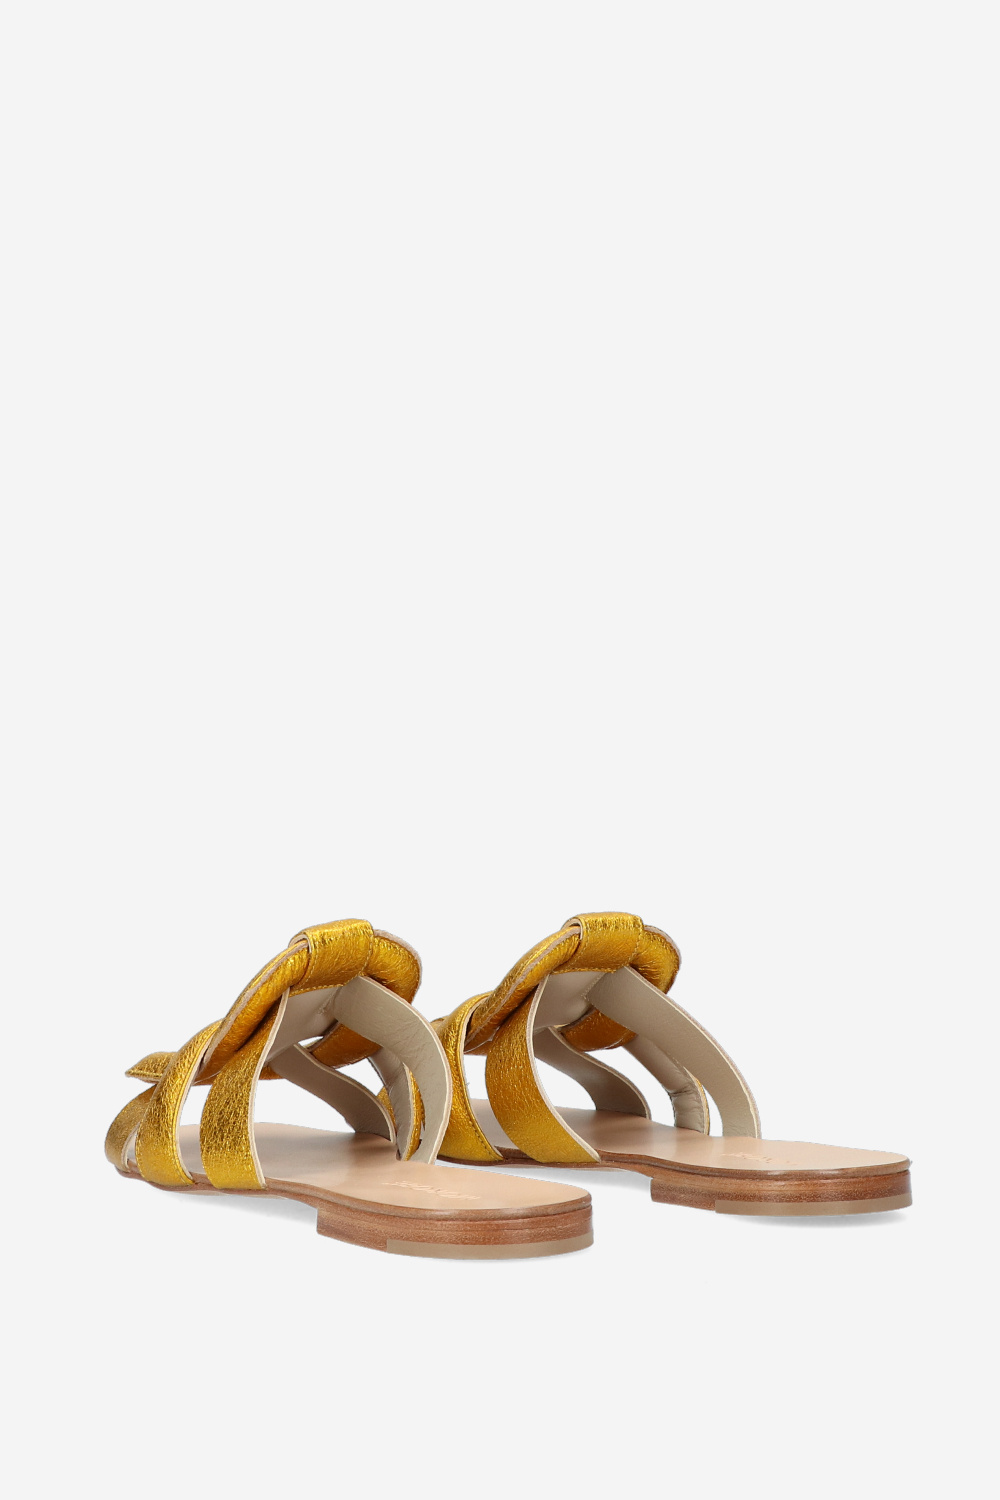 Morobe Sandals Gold